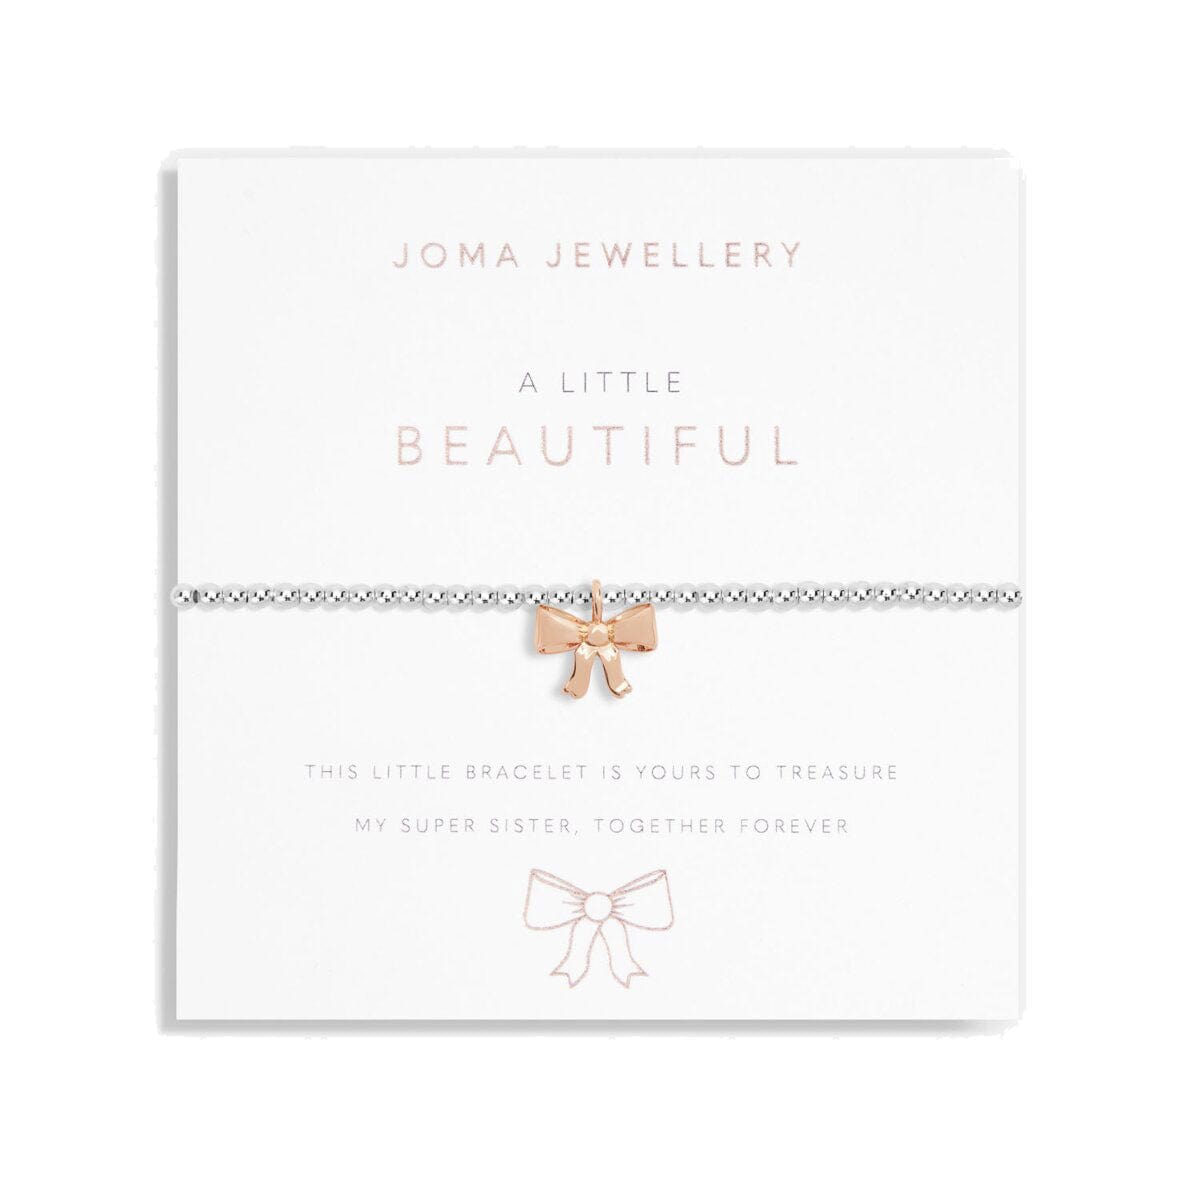 Joma Jewellery Childrens Bracelet Joma Jewellery Children's Bracelet - A Little Beautiful